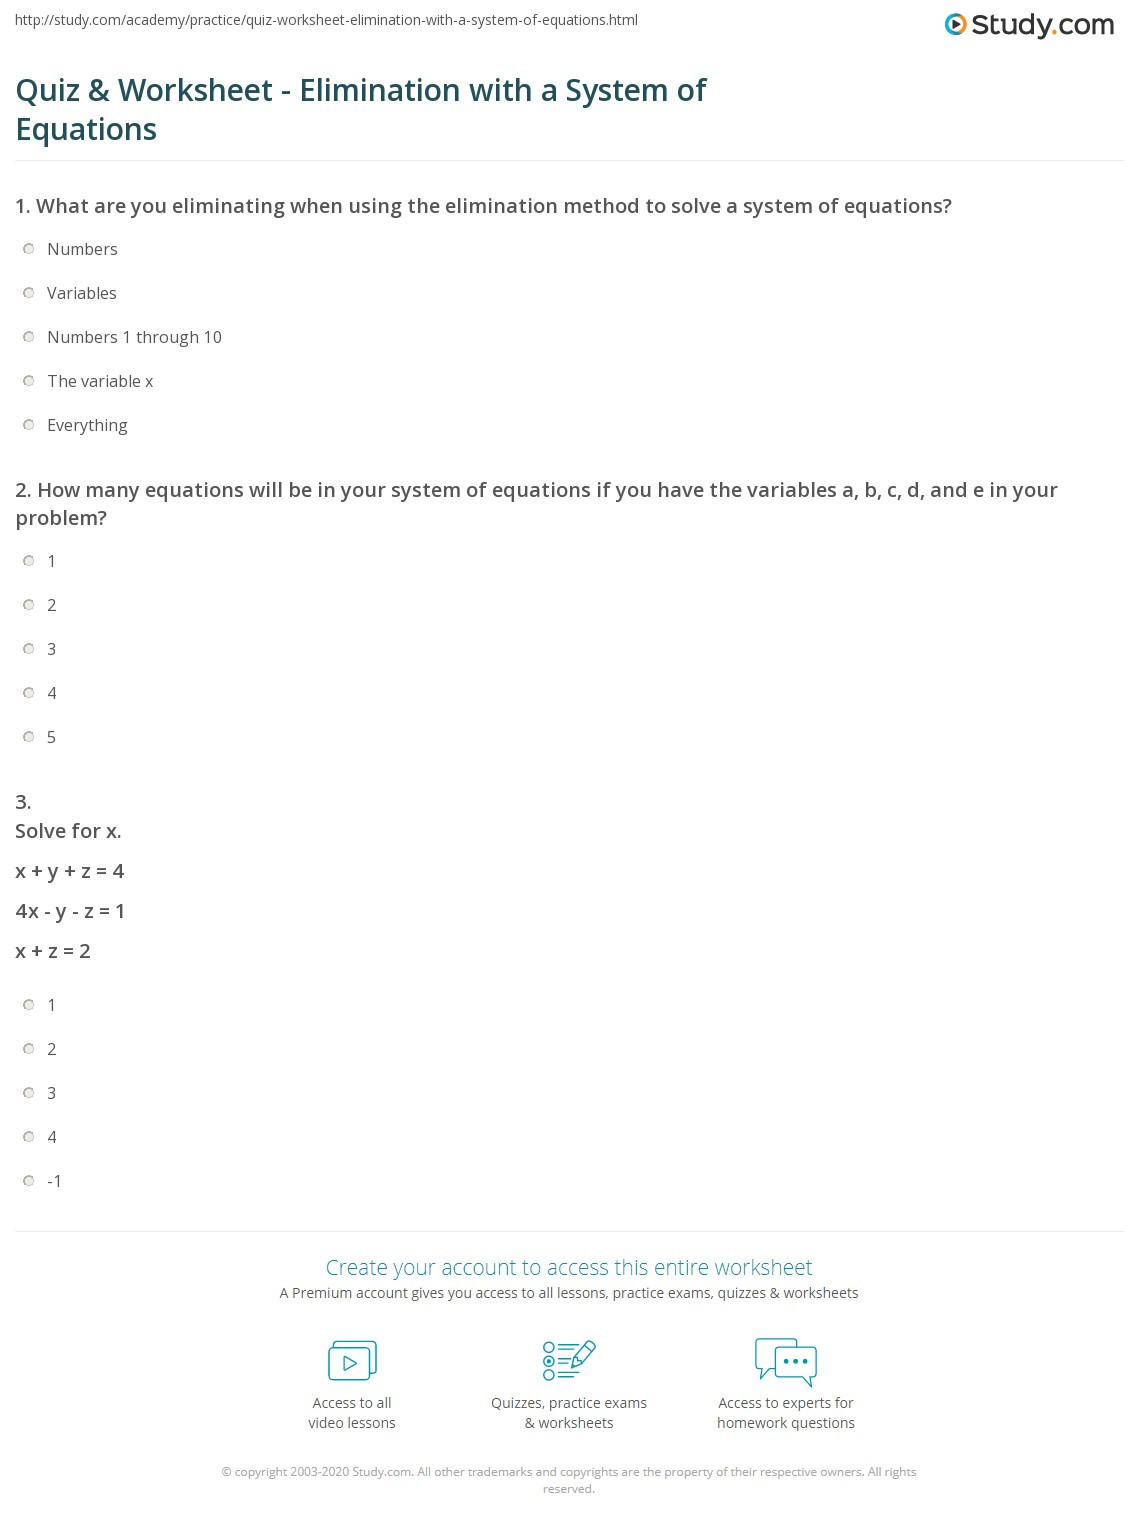 Solve by Elimination Worksheet Quiz &amp; Worksheet Elimination with A System Of Equations